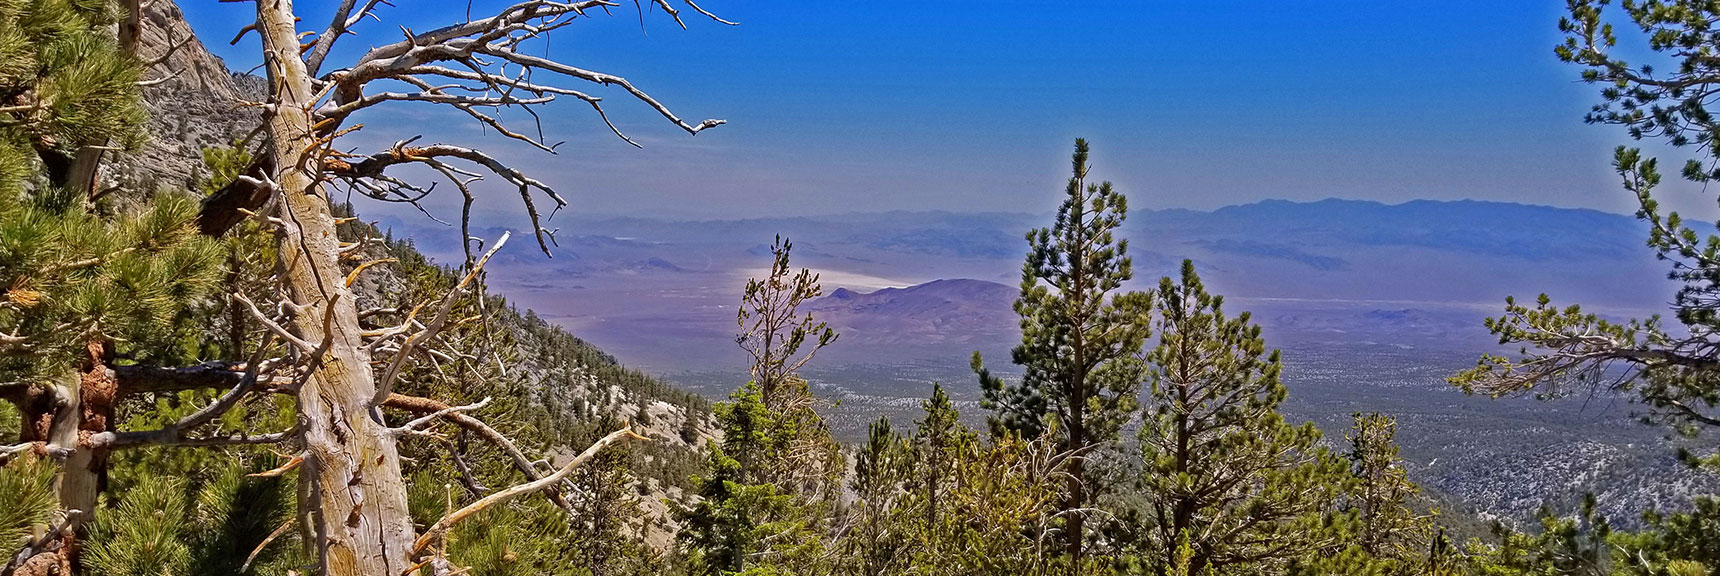 View Up Hwy 95 Corridor from Near Final SW Summit Approach Ledge| Macks Peak | Mt Charleston Wilderness | Spring Mountains, Nevada